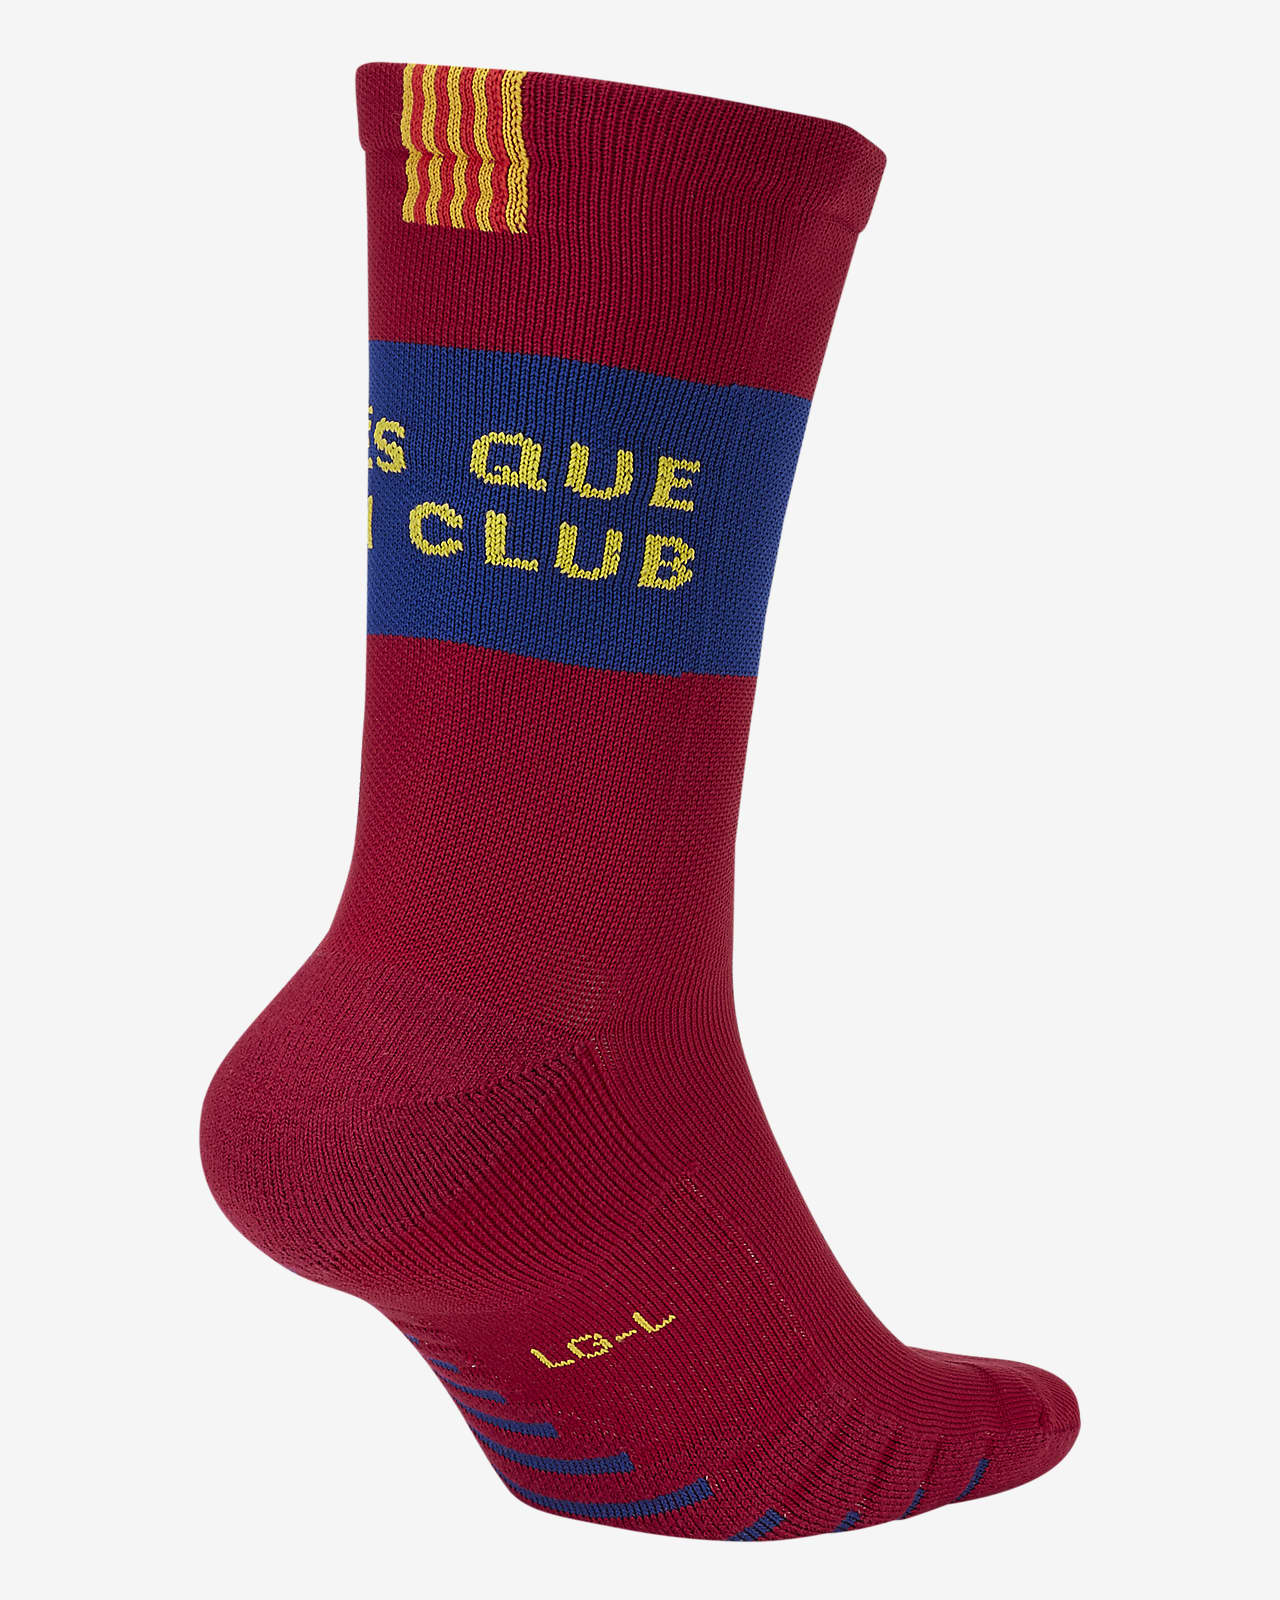 barcelona football socks